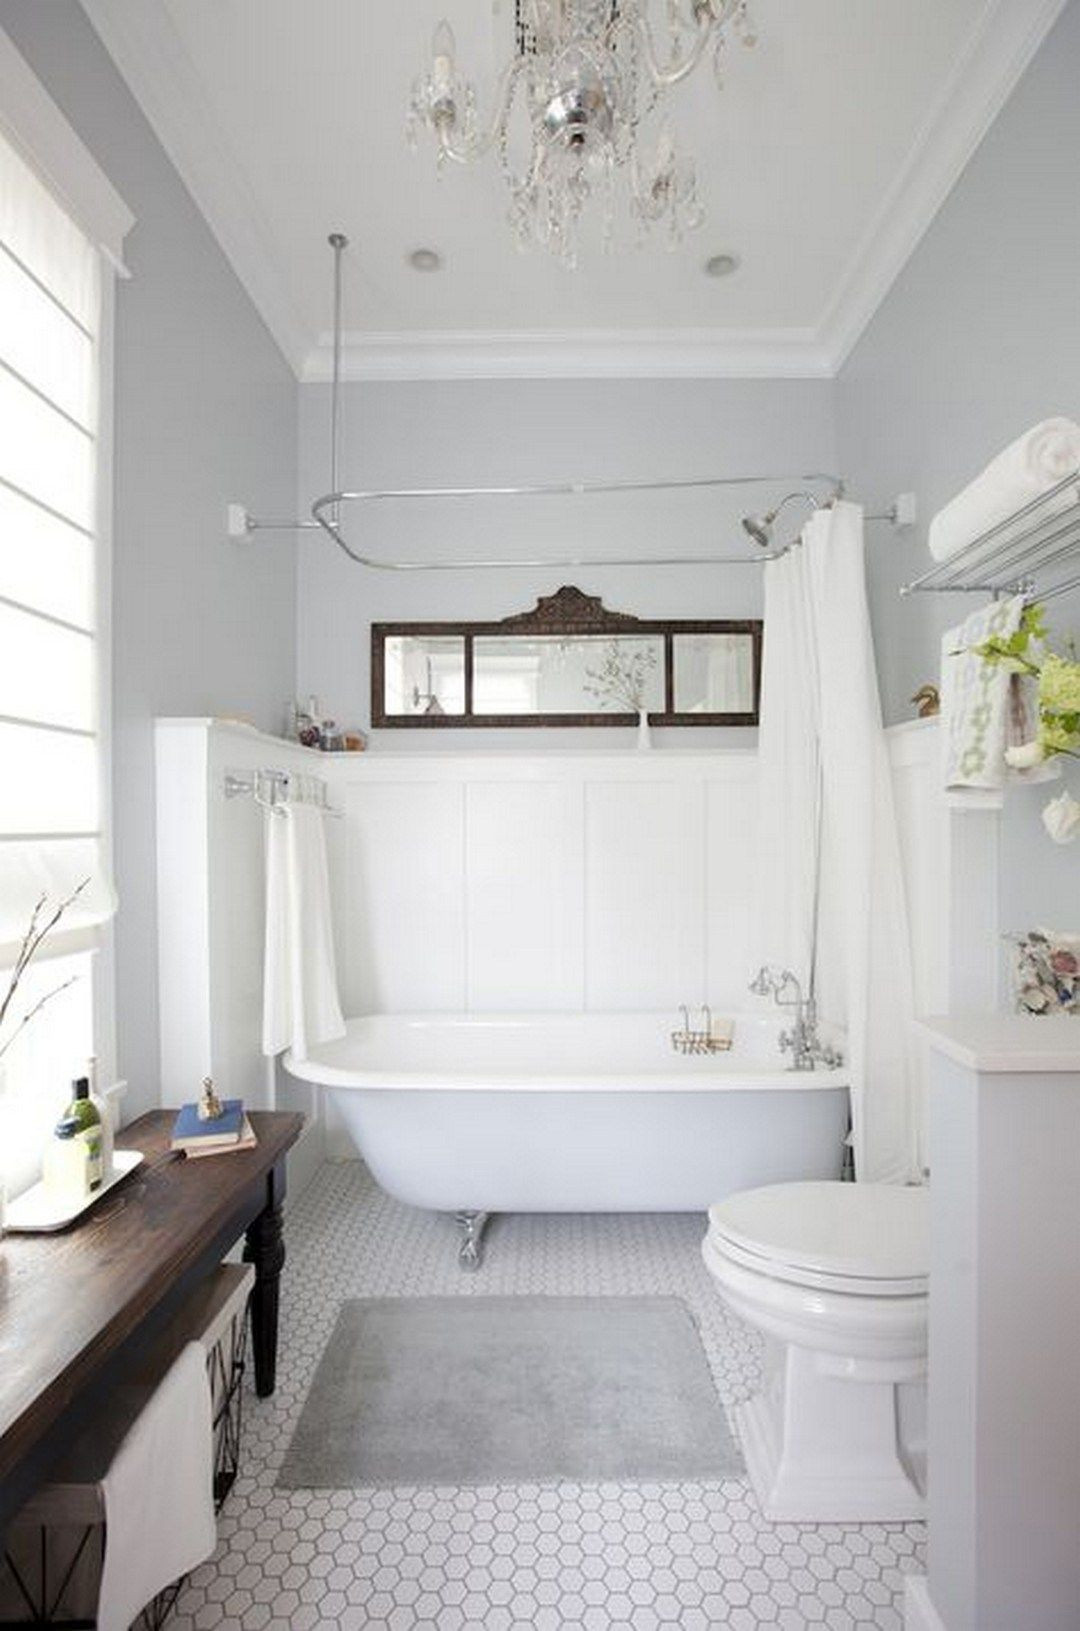 Small Master Bathroom Ideas
 100 Small Master Bathroom Design Ideas decoratoo